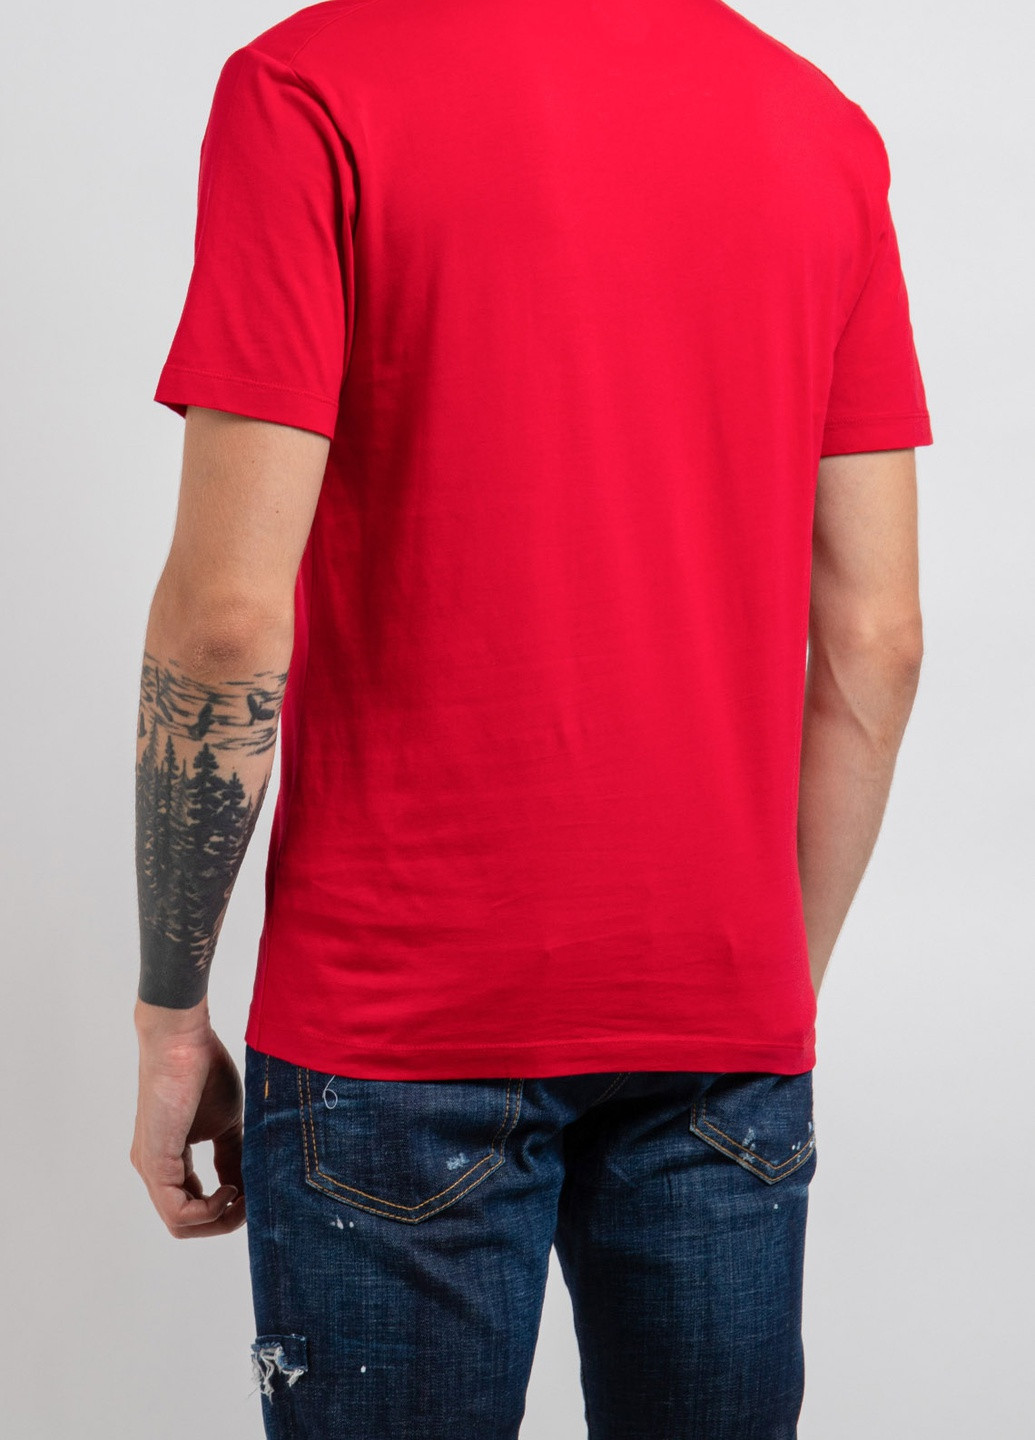 Красная красная футболка с логотипом Dsquared2